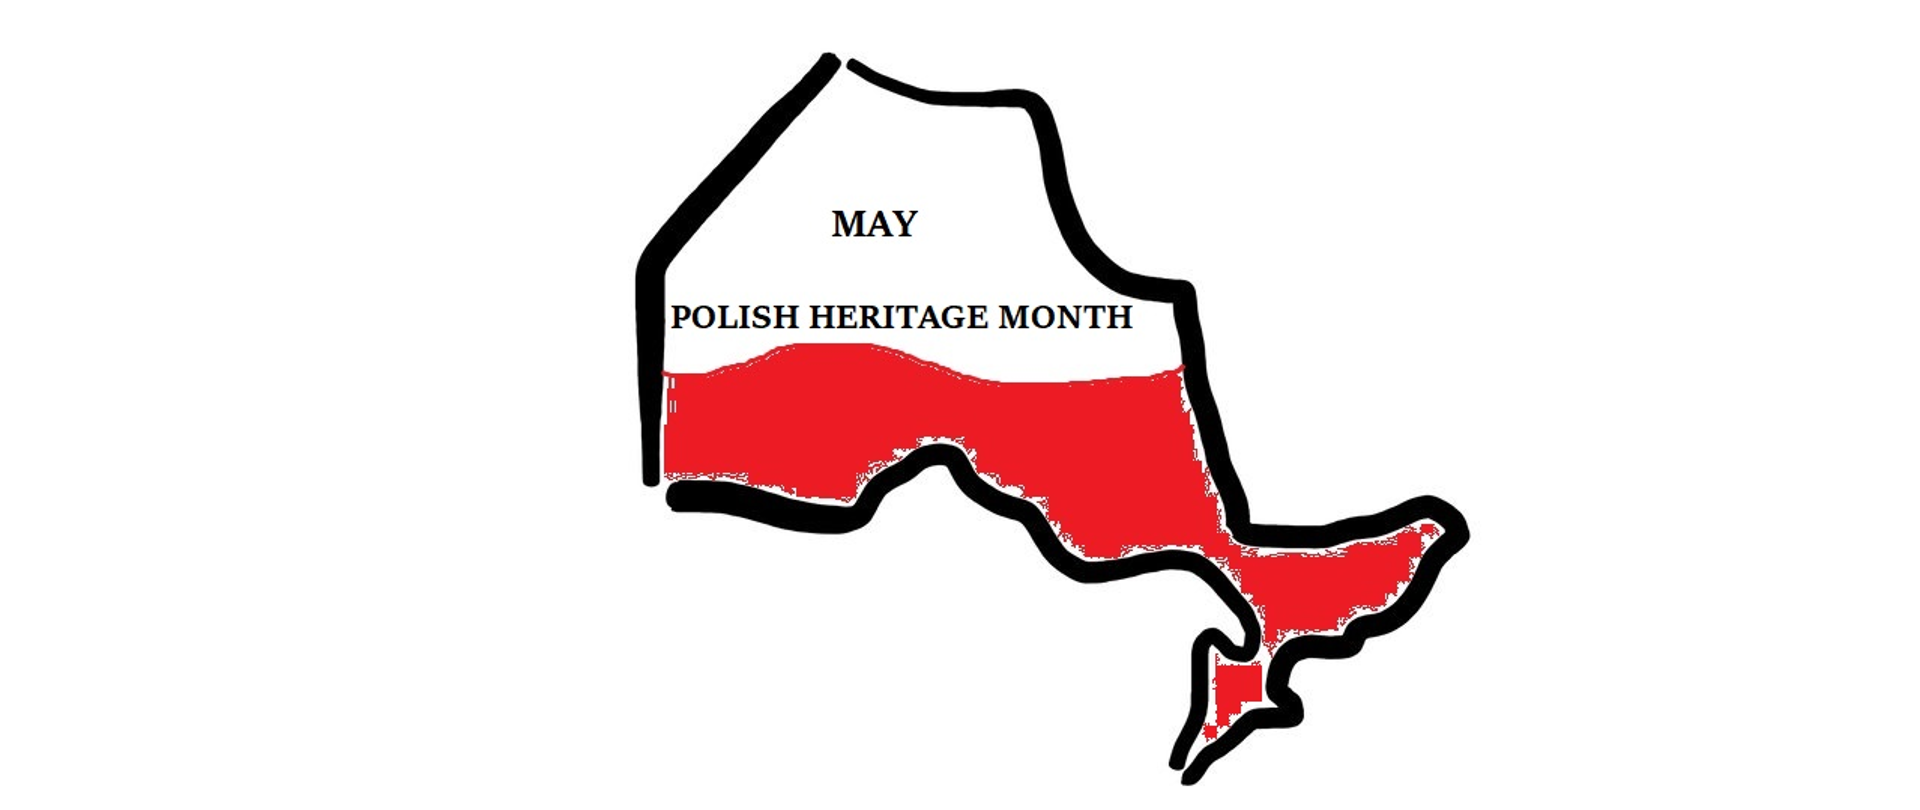 Polish Heritage Month - May